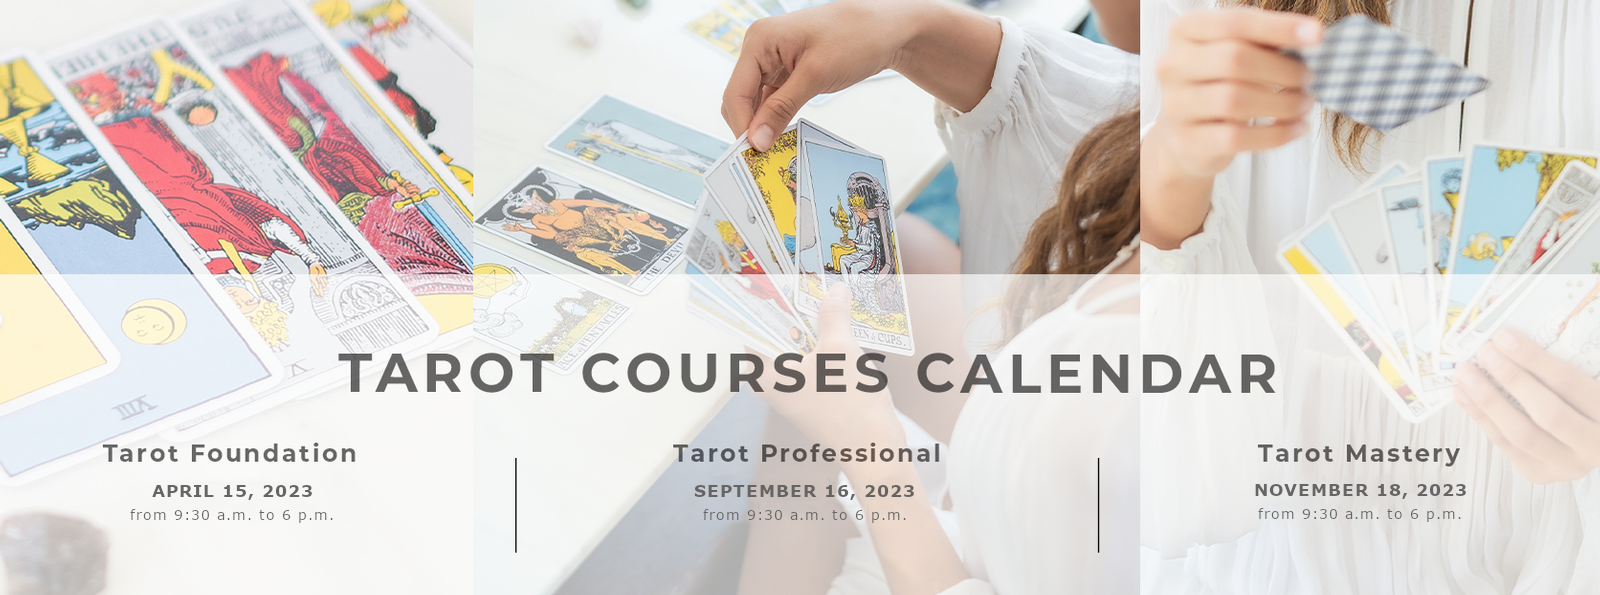 Tarot Courses banner 2023.png